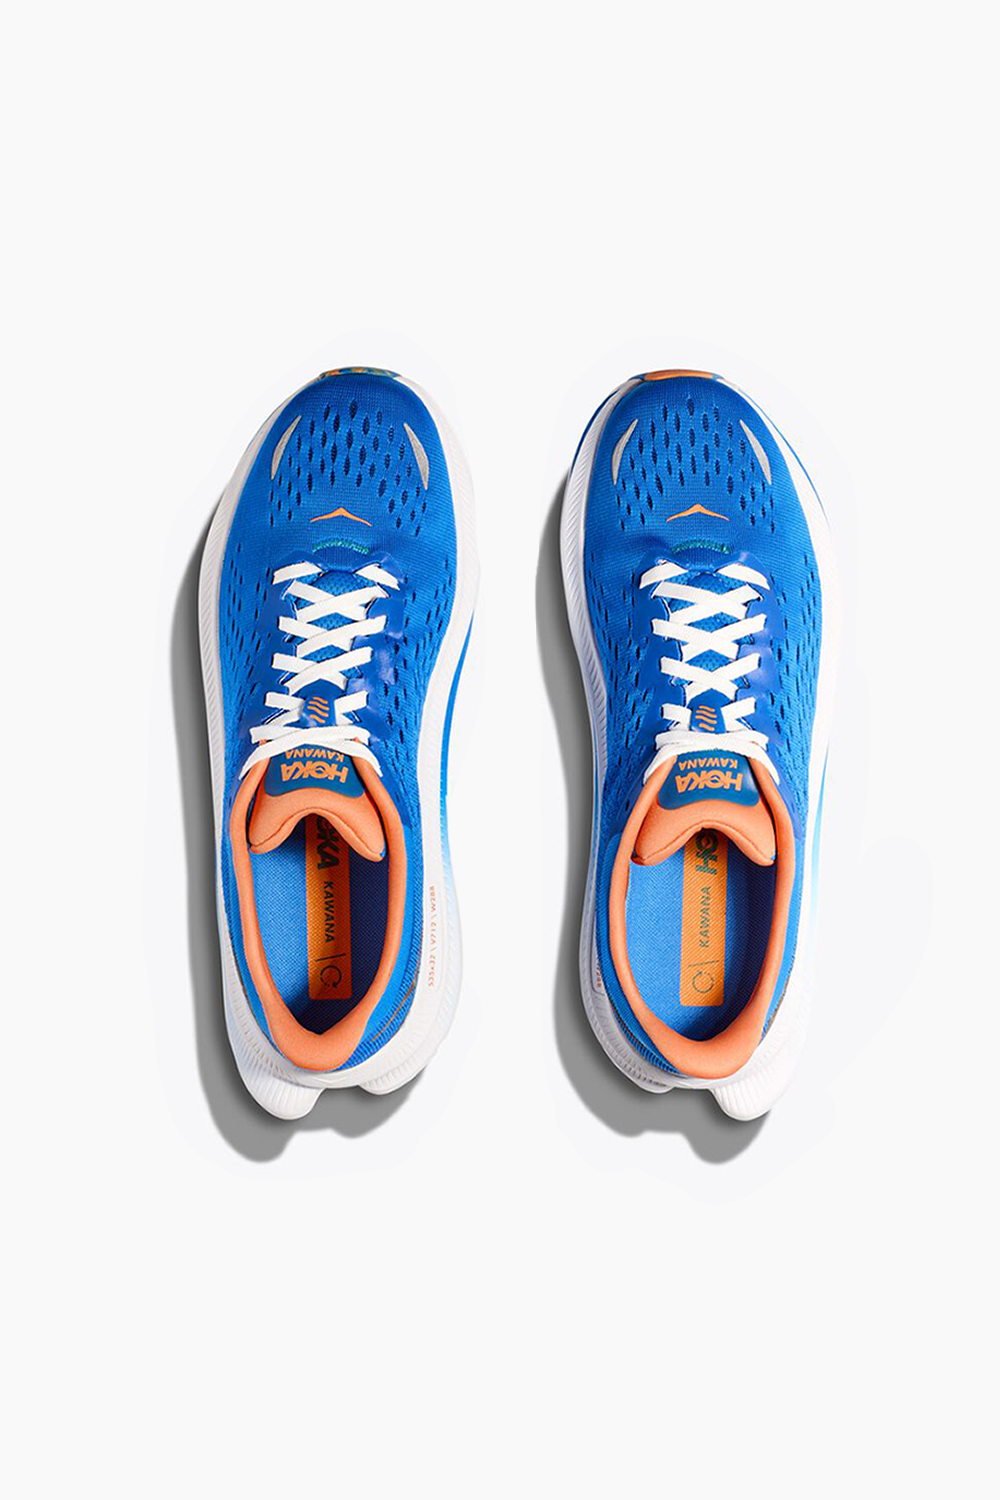 Hoka Men's Kawana Running Shoes in Coastal Sky/Bellwether Blue